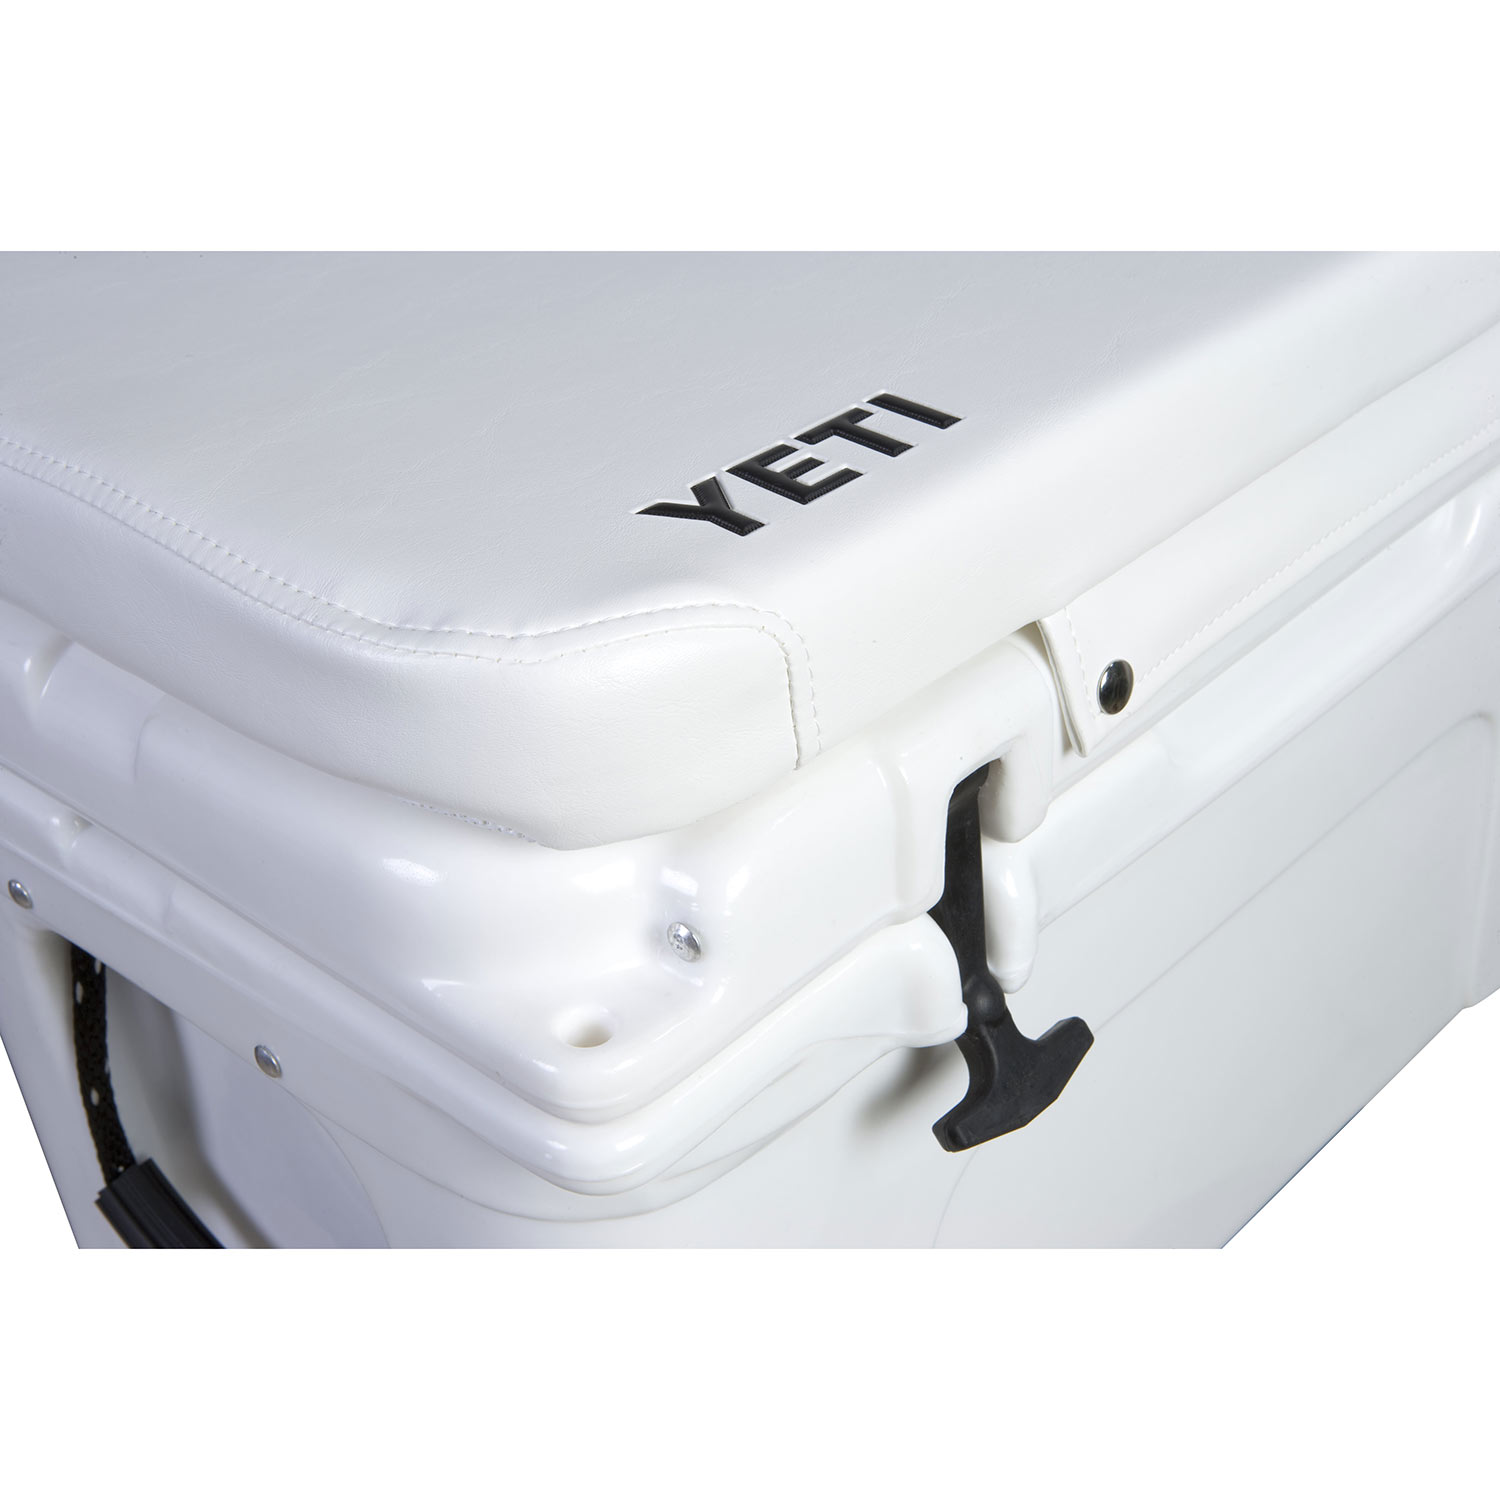 Wylaco Supply  YETI Tundra 110 Seat Cushion White